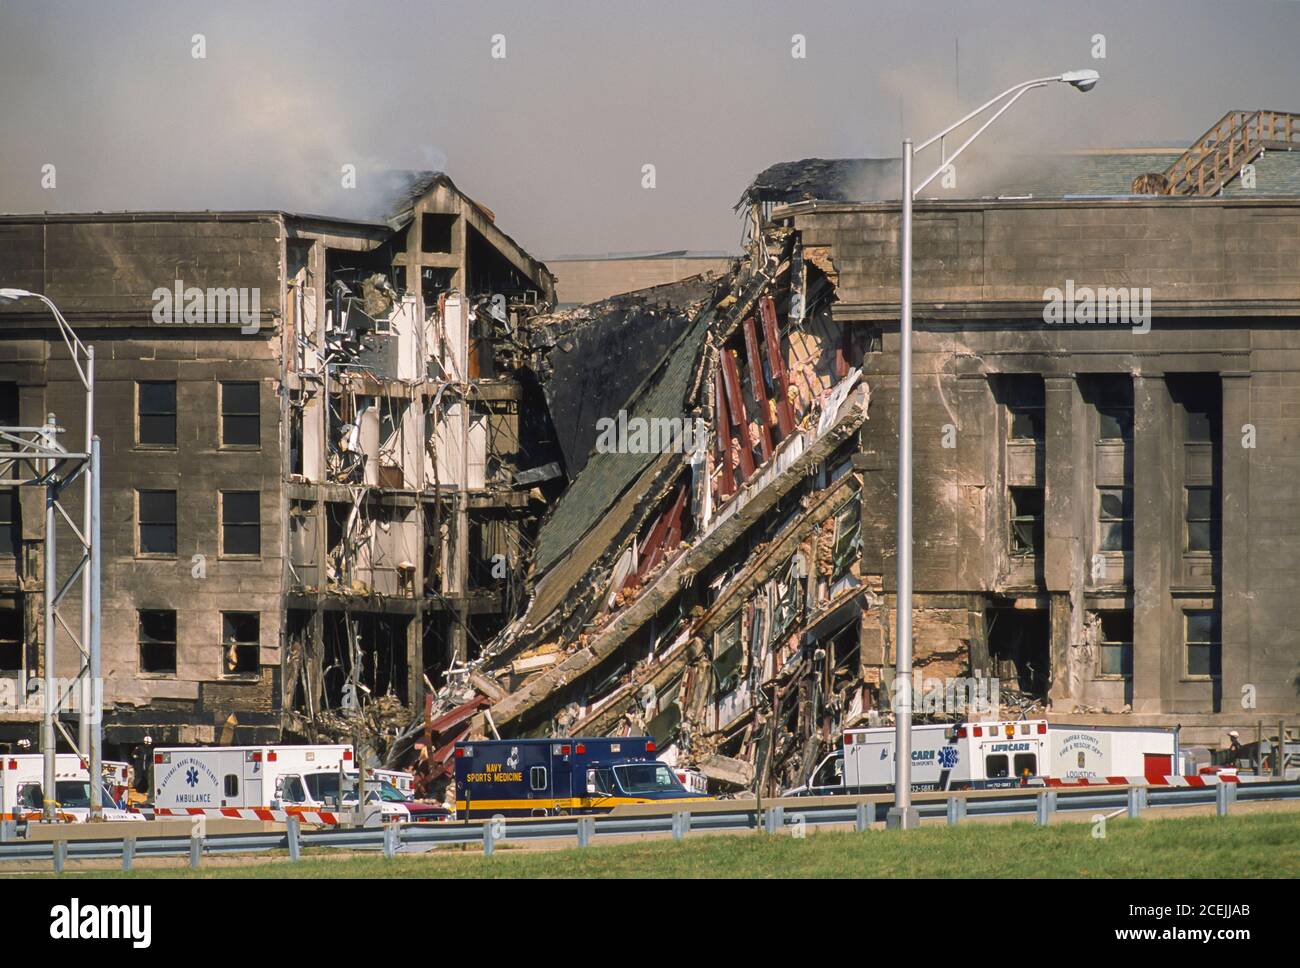 ARLINGTON, VIRGINIA, USA, SEPTEMBER 11, 2001 - Pentagon west side damage from hijacked 757 jetliner terrorism crash. Stock Photo